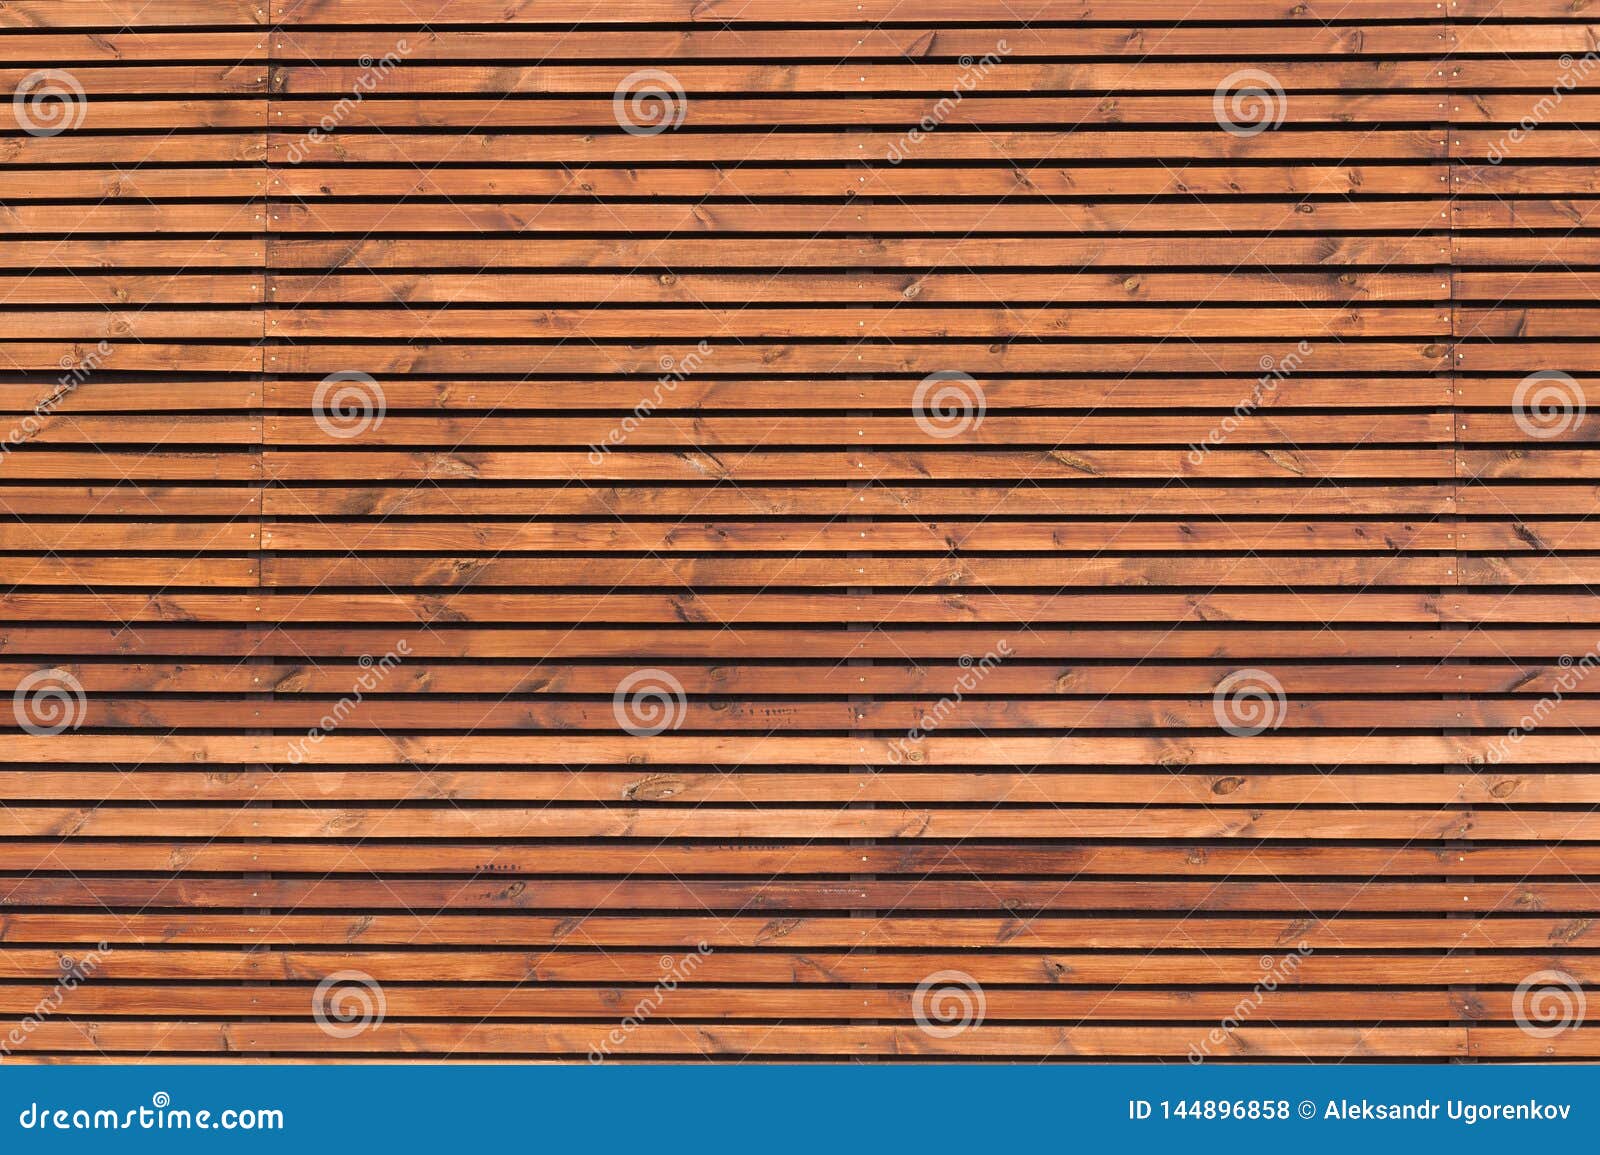 wood slats timber wall